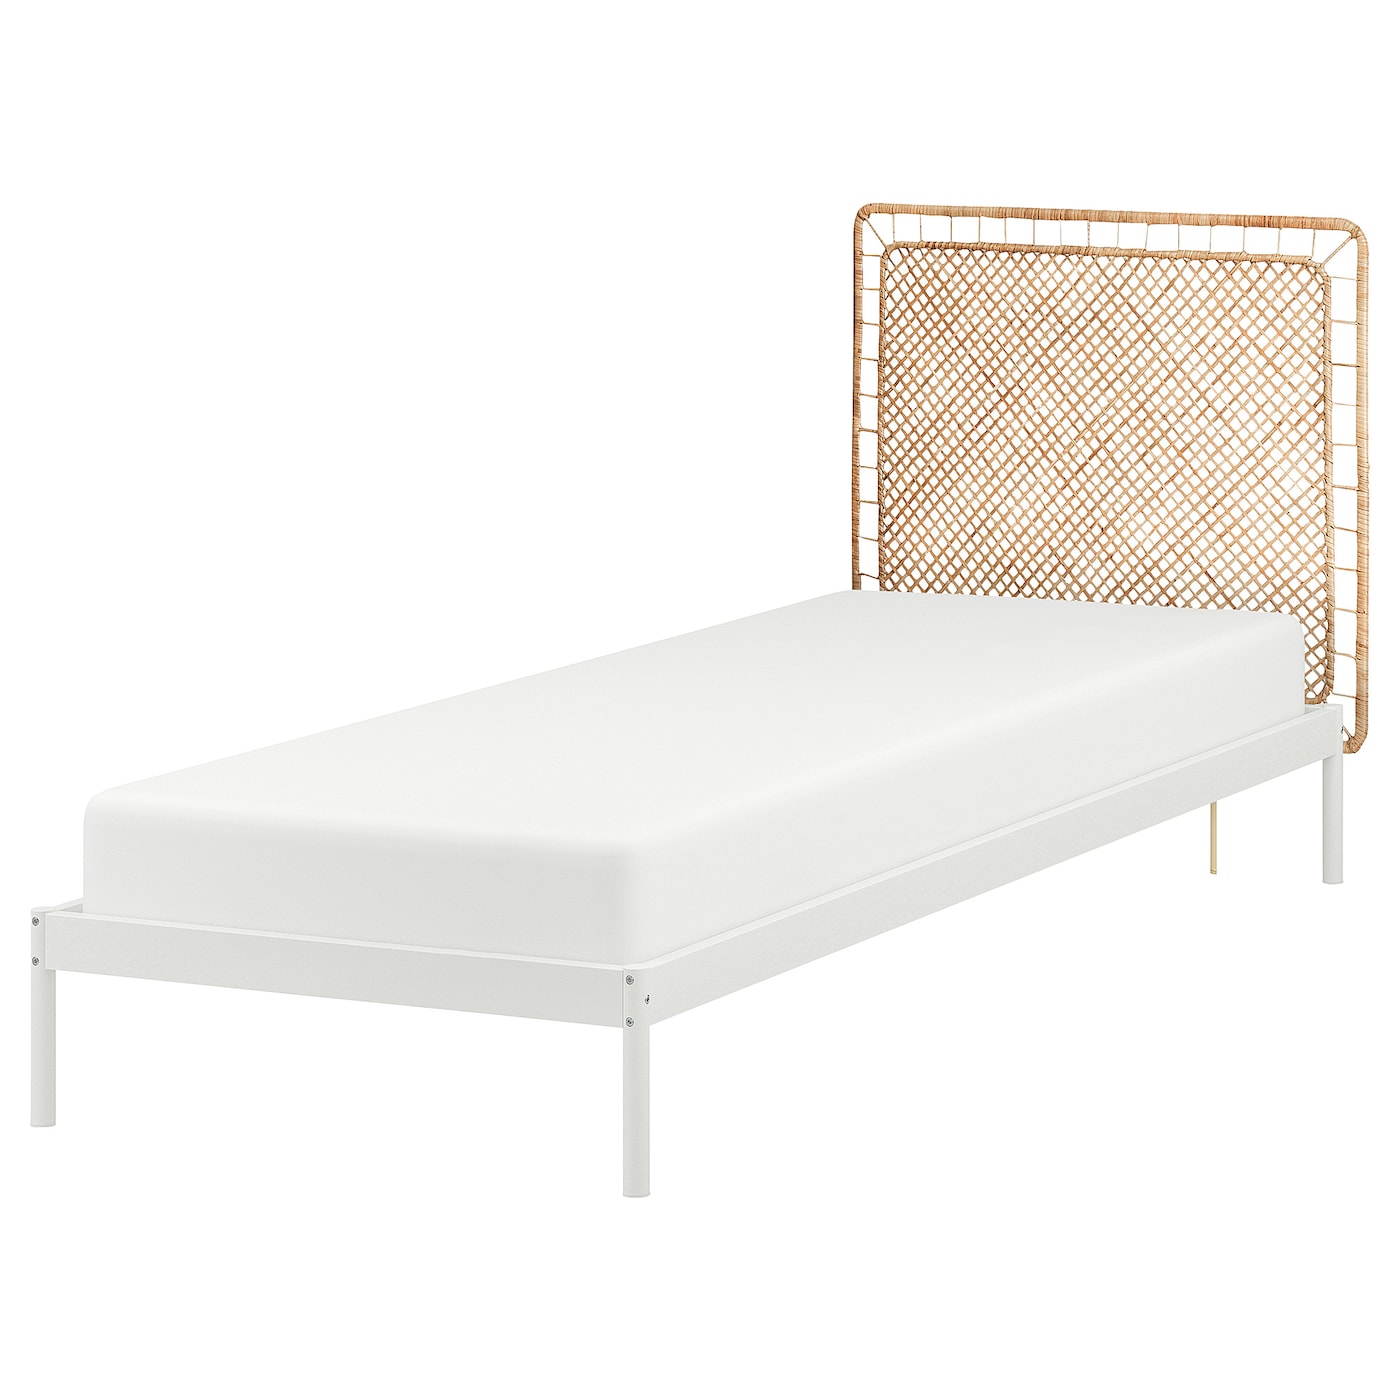 Каркас кровати с 1 изголовьем - IKEA VEVELSTAD, 200х90 см, белый, ВЕВЕЛСТАД ИКЕА